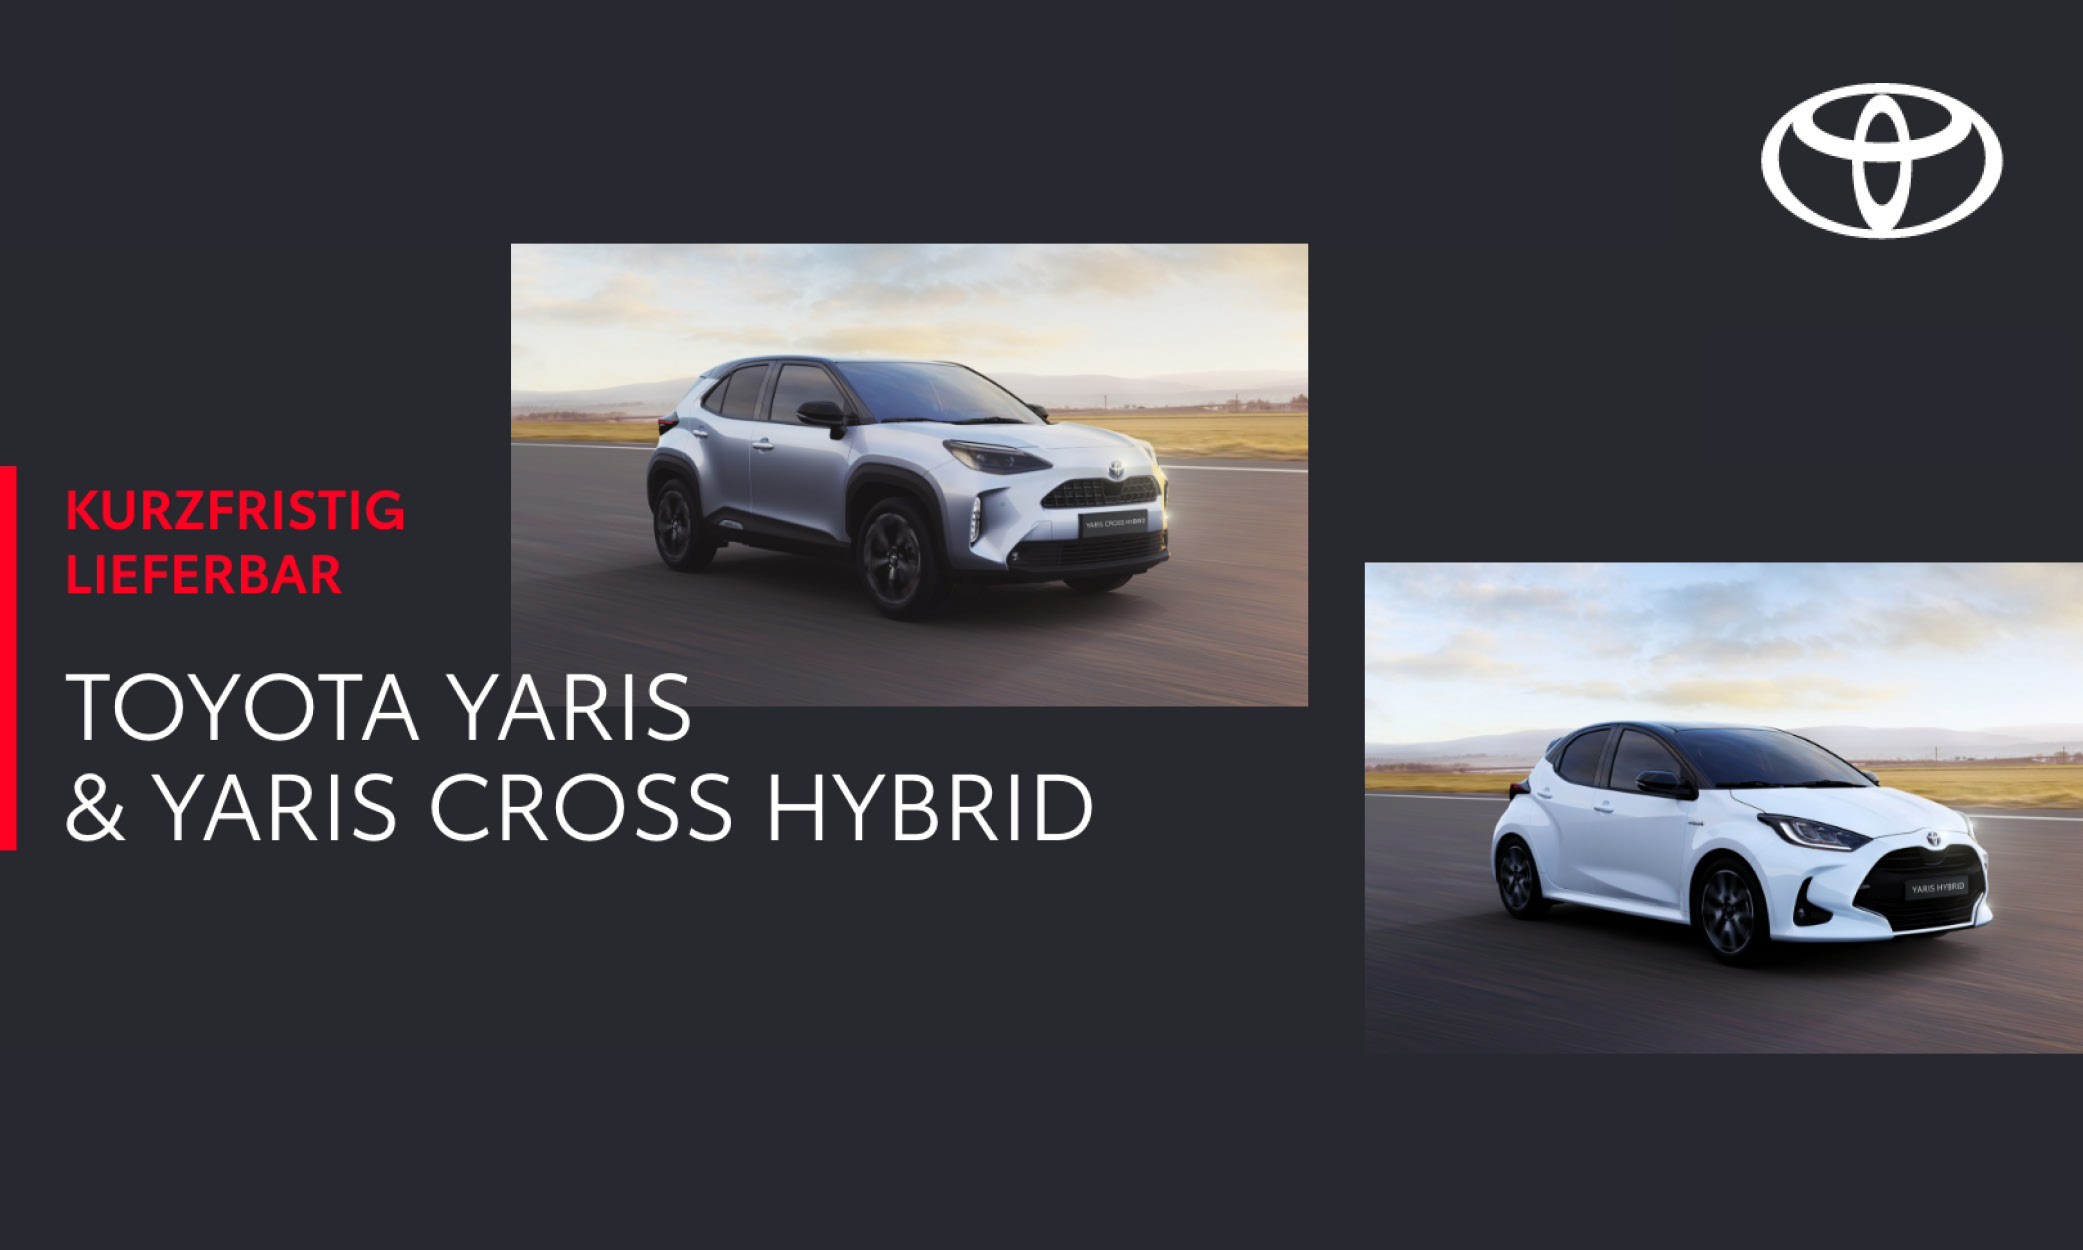 Toyota Yaris & Yaris Cross Hybrid